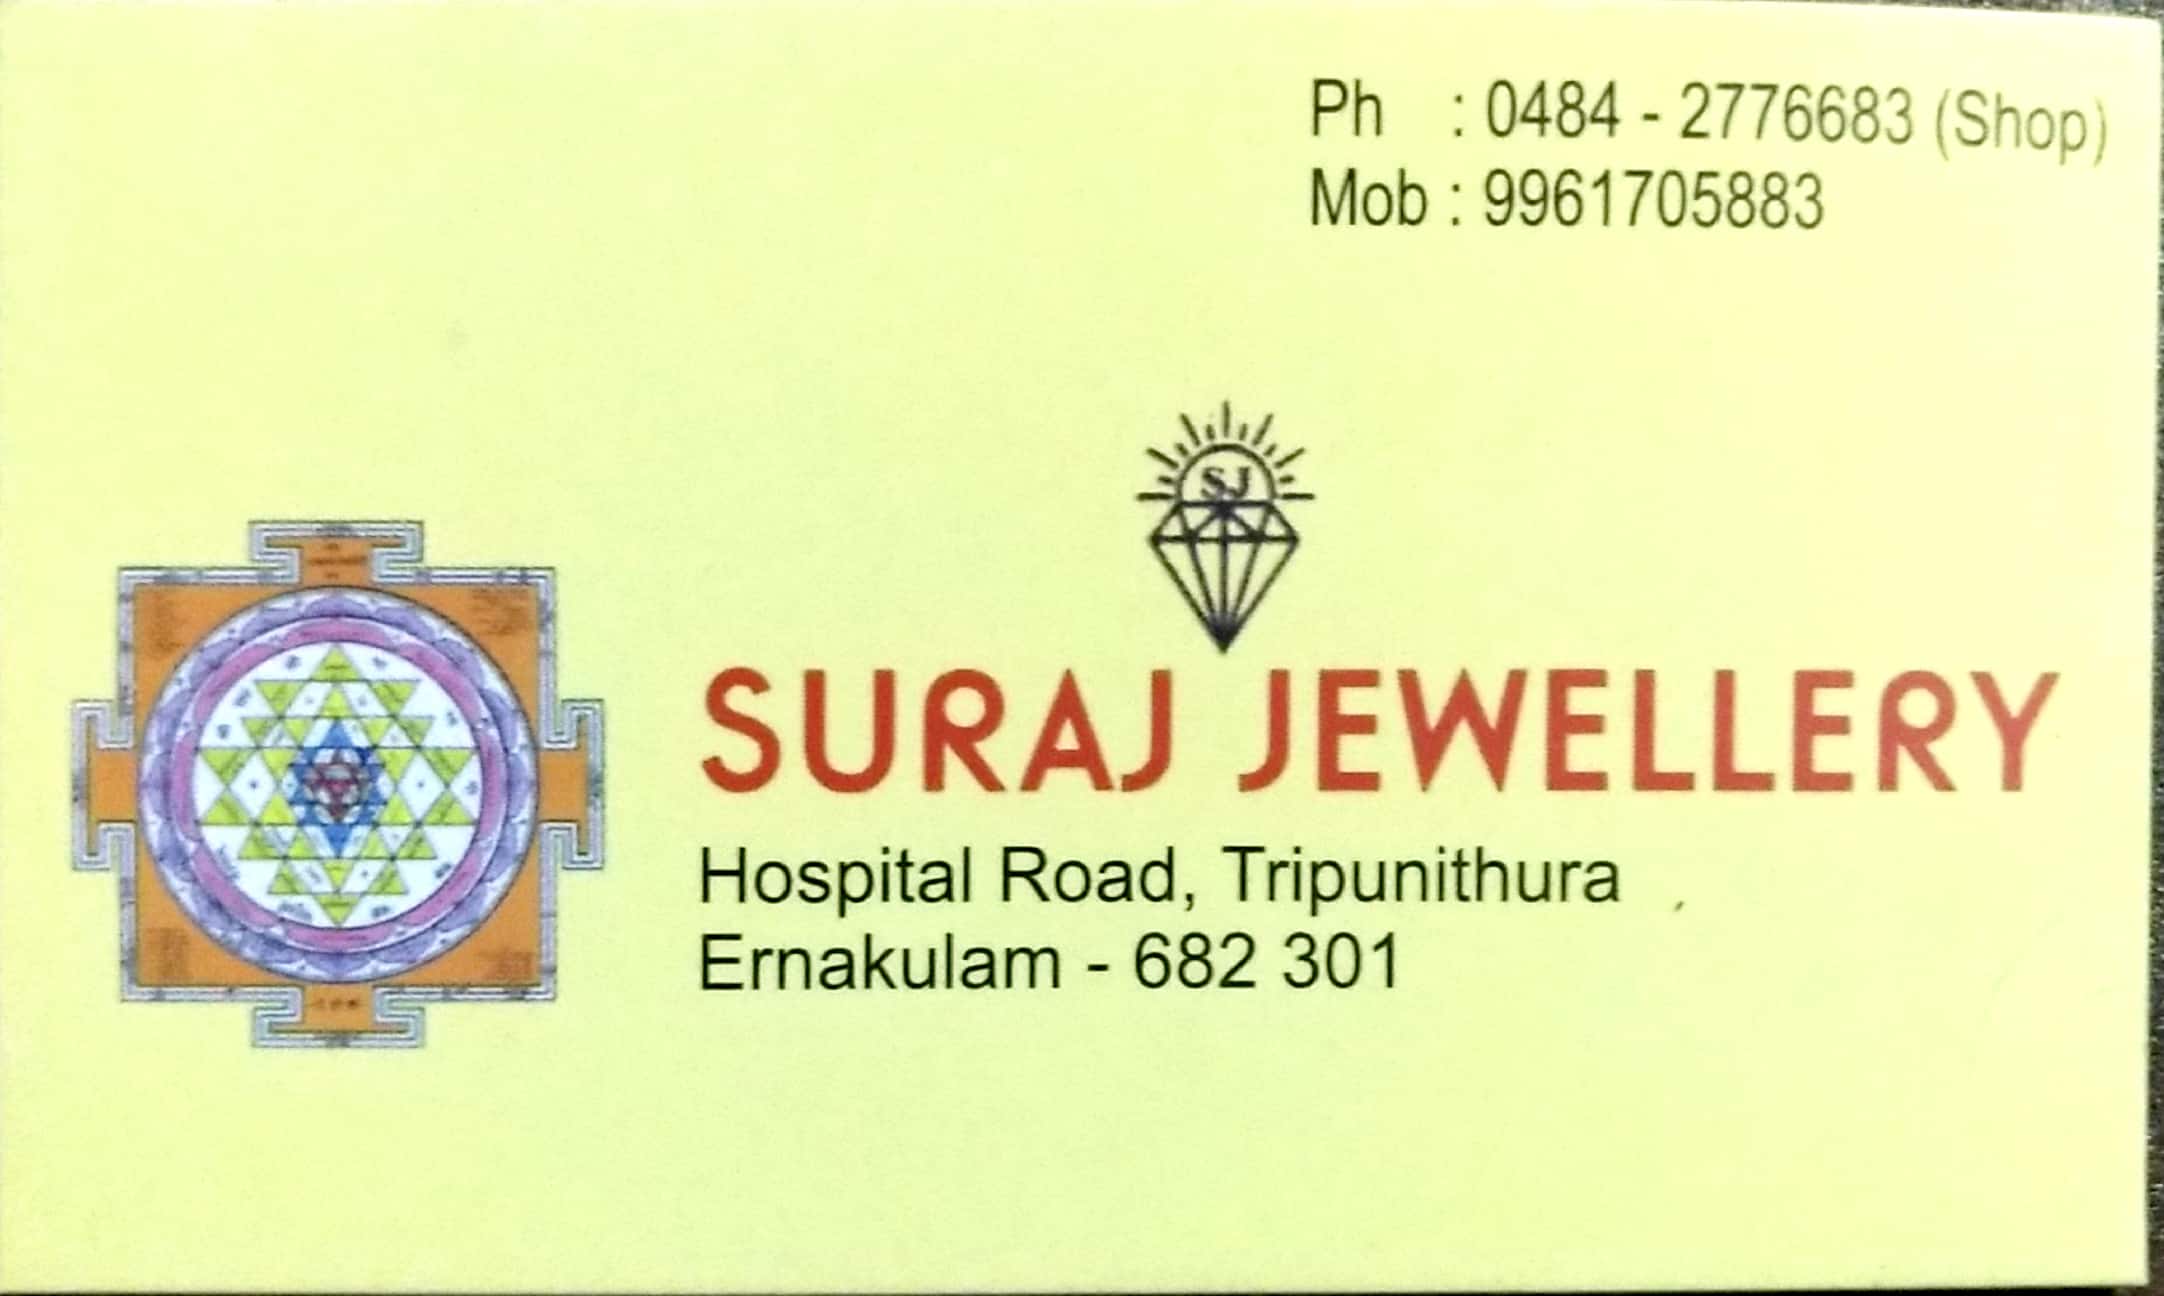 SURAJ JEWELLERY, JEWELLERY,  service in Thrippunithura, Ernakulam